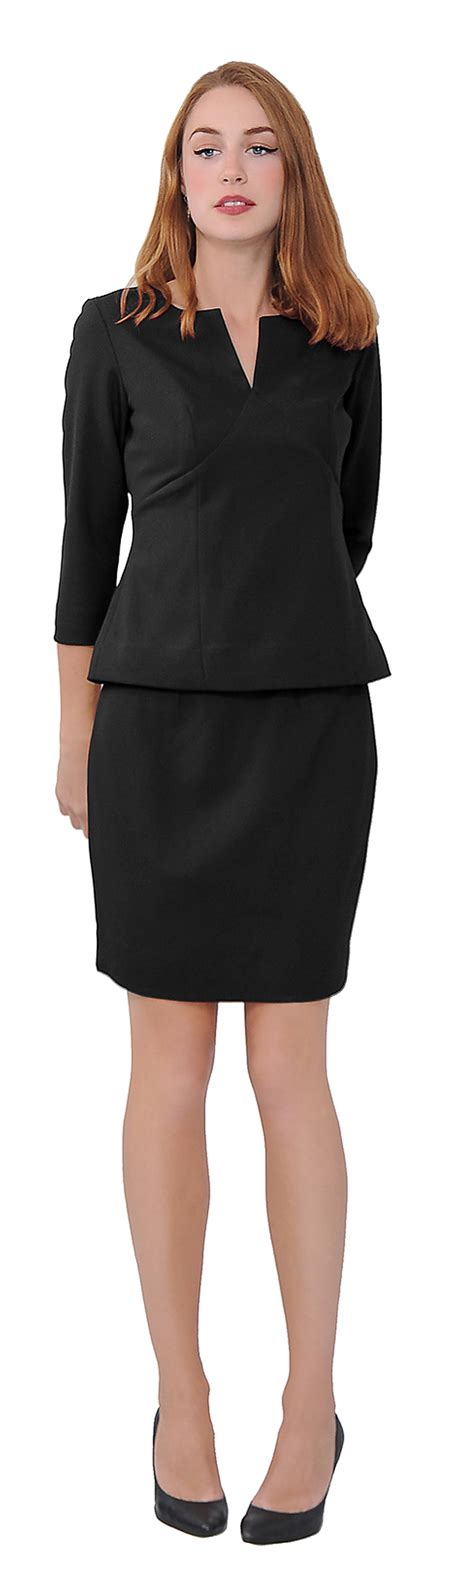 Marycrafts Womens Elegant Skirt Suit Set Work Office Business Wear